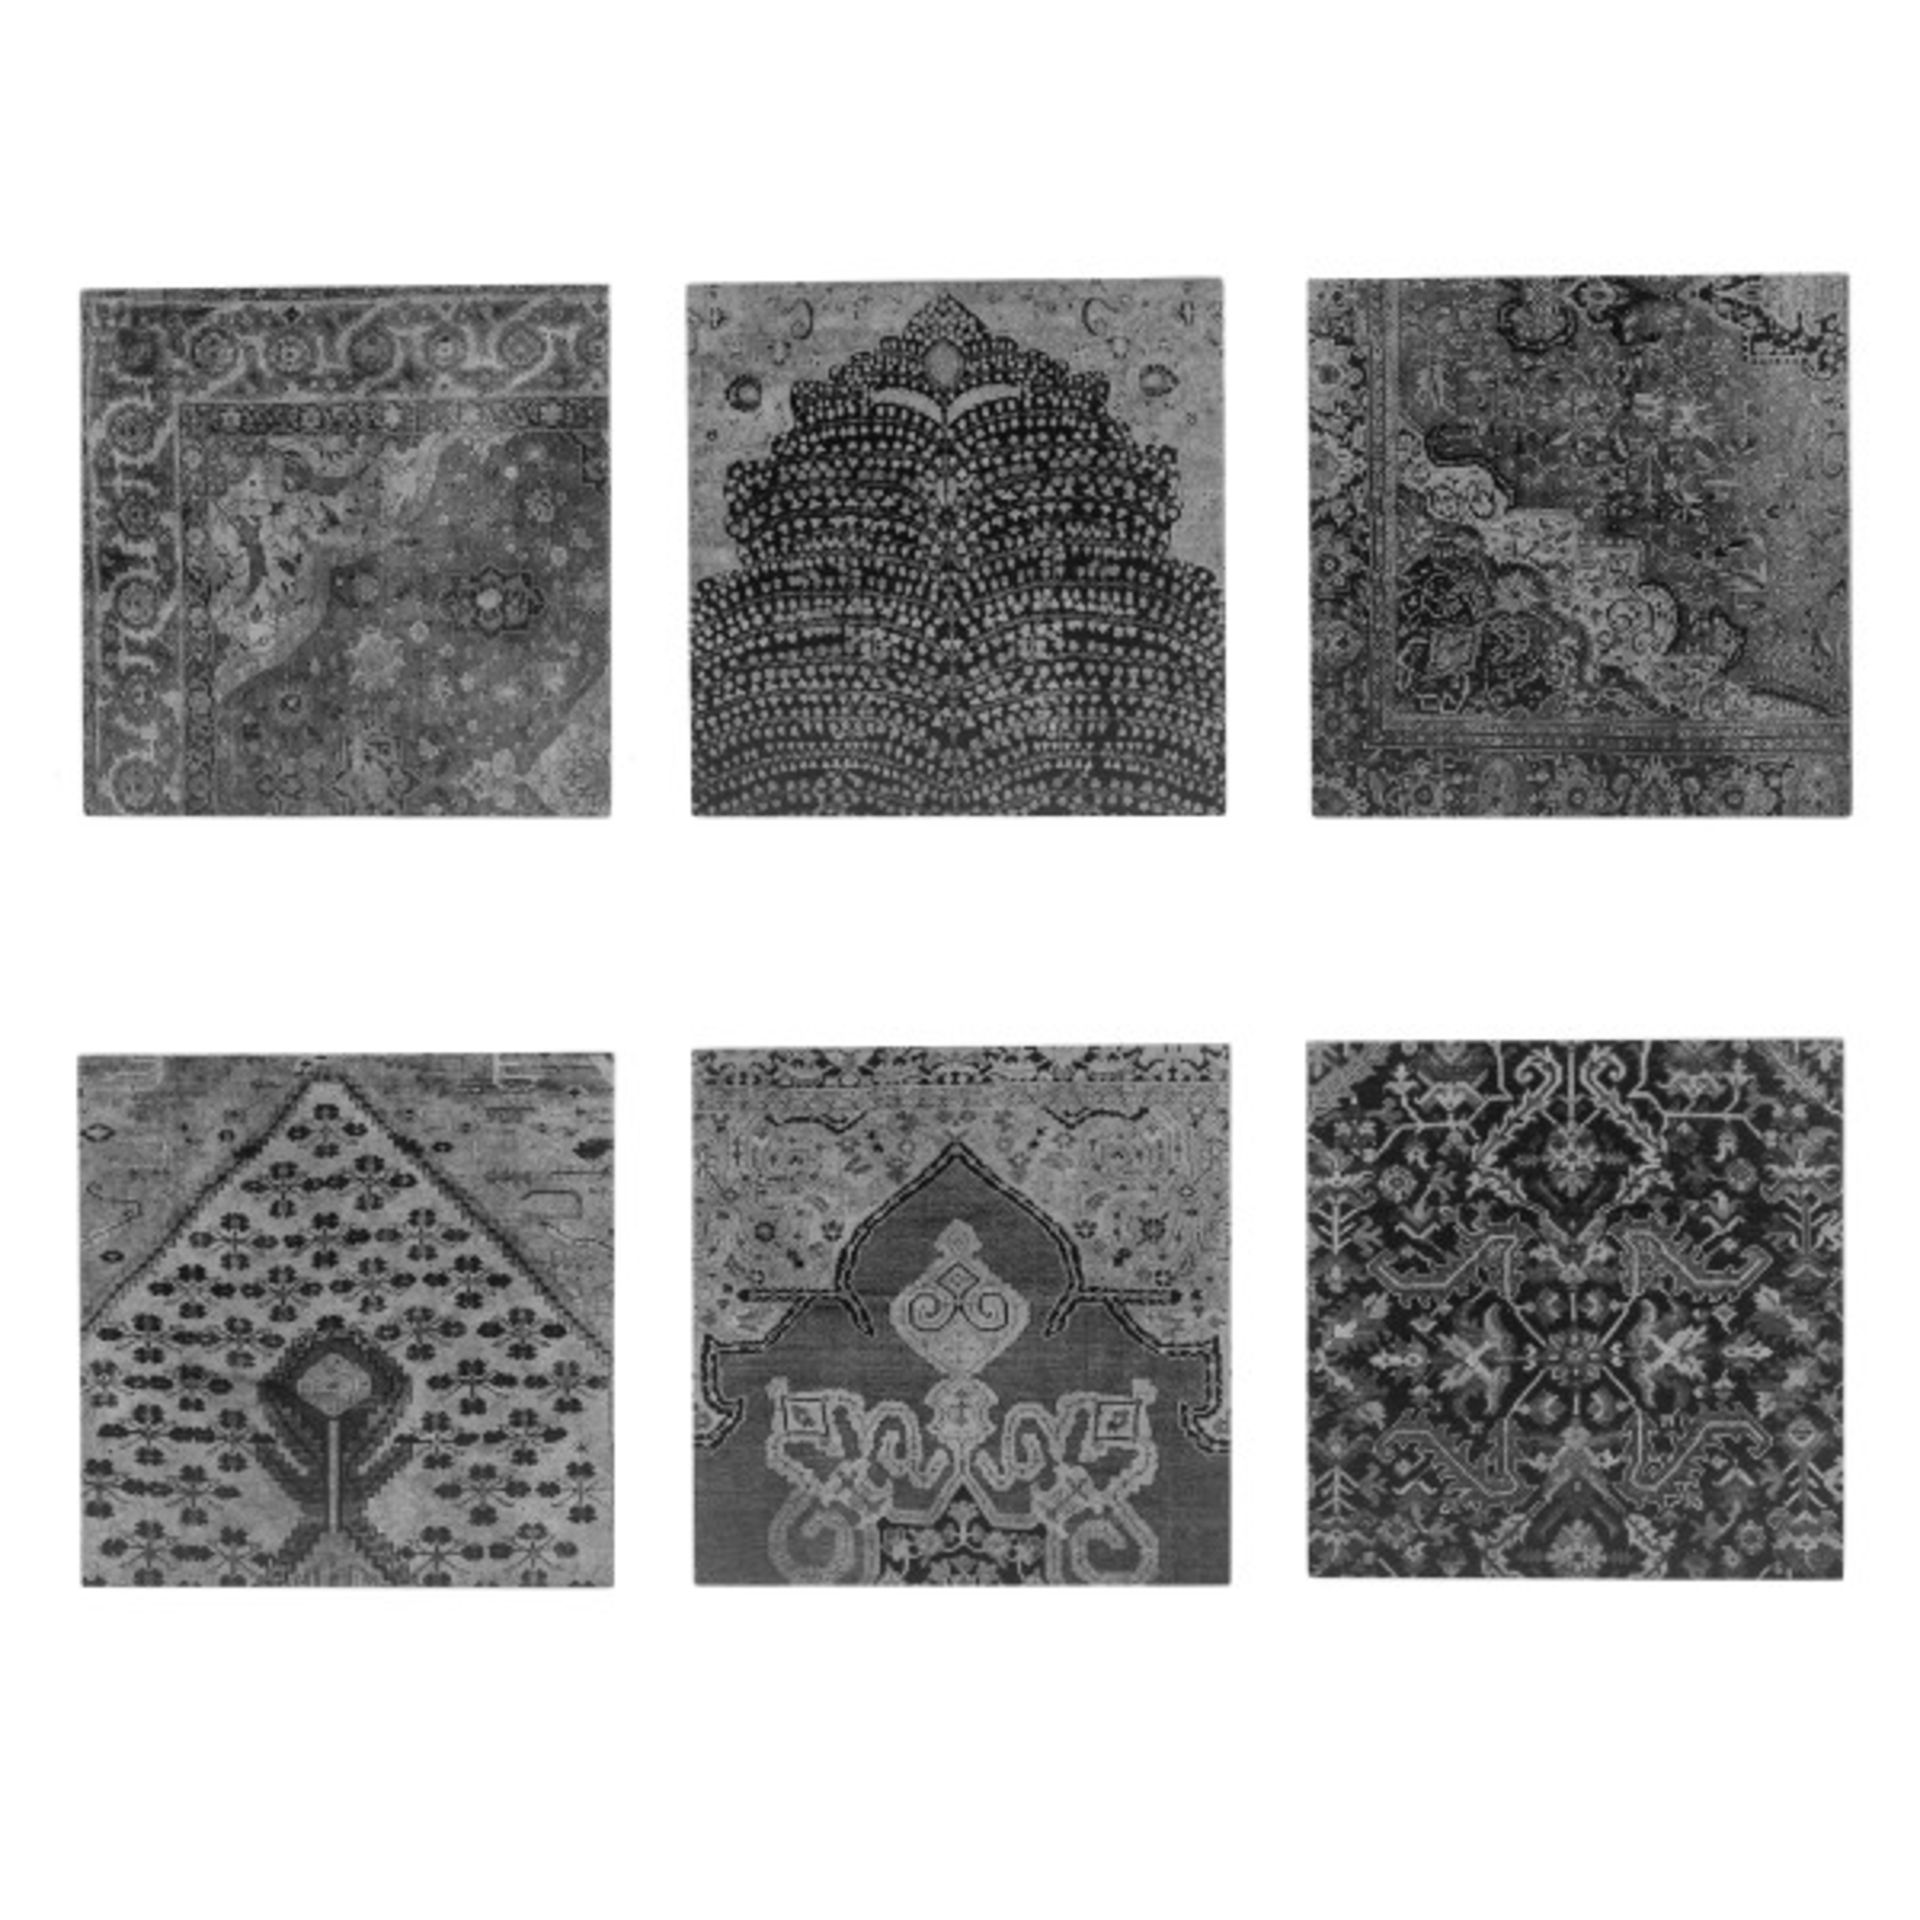 Coup & Co Wall Art Persian Persian Carpet Wall Tiles Black & White Set of 6 35.1 x 4.6 x 35.1 CM-